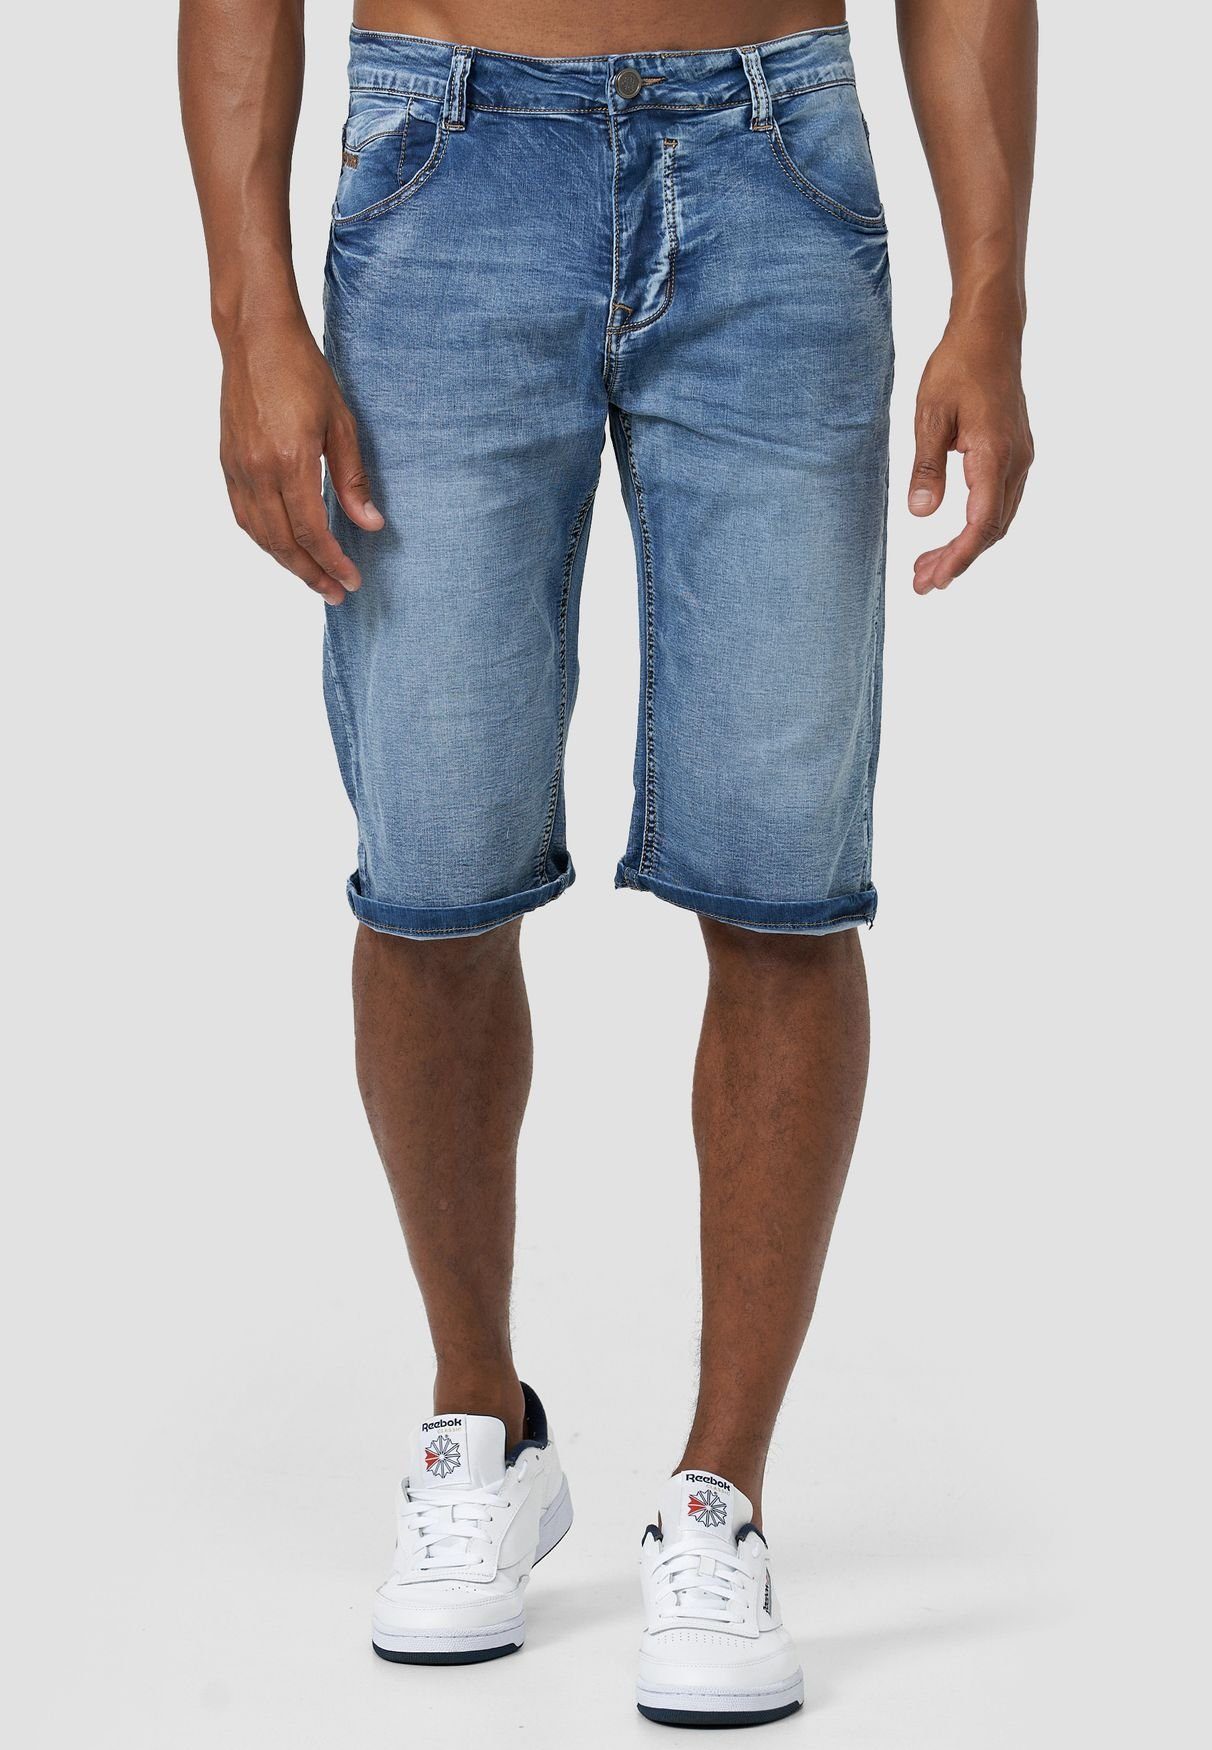 LEO GUTTI Jeansshorts »3651« Herren Capri Jeans Shorts Sommer Kurze 3/4  Hose Acid Wash Denim Pants online kaufen | OTTO